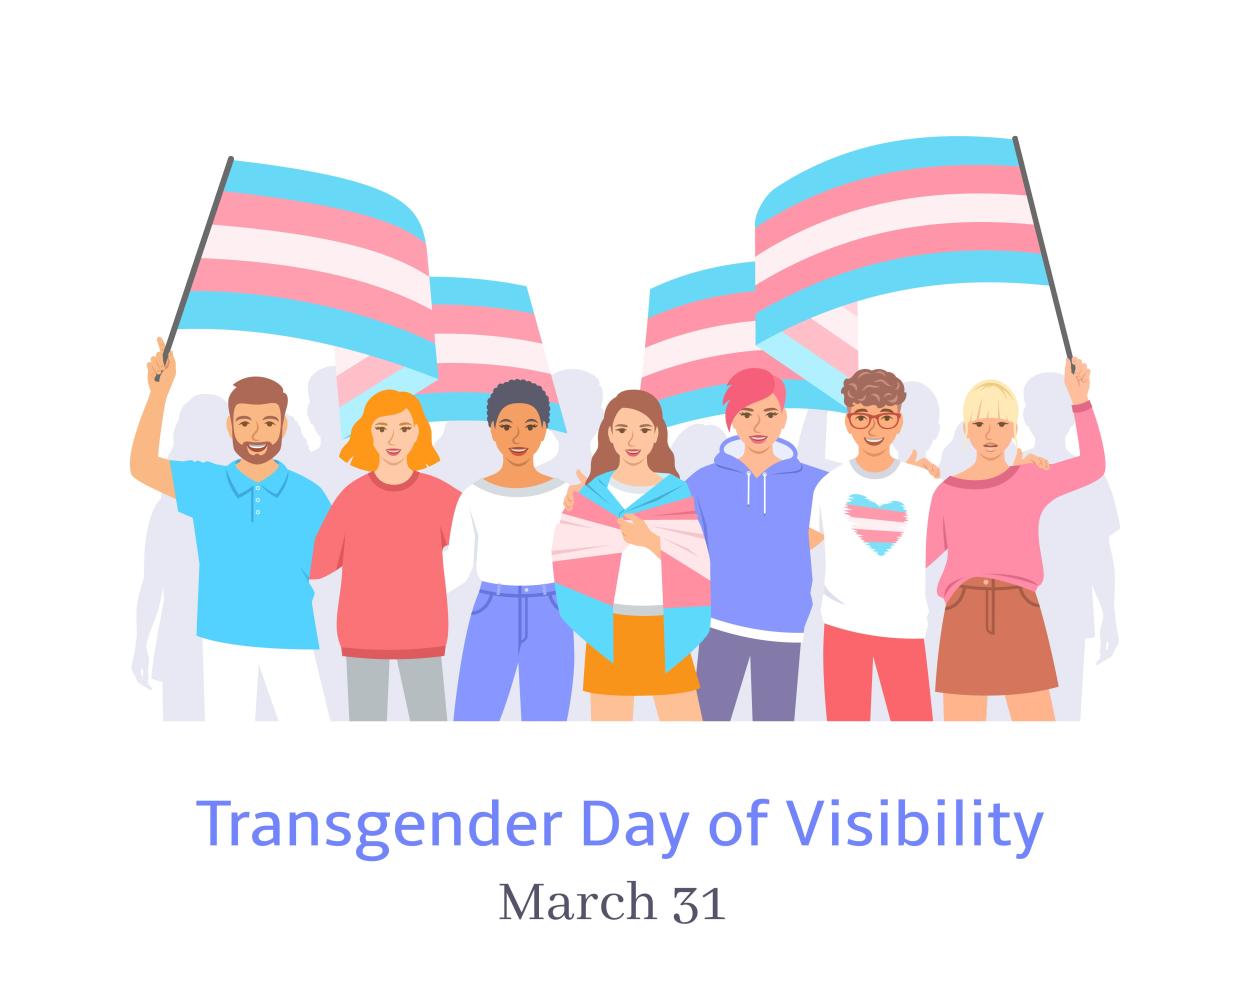 International Transgender Day of Visibility celebration.